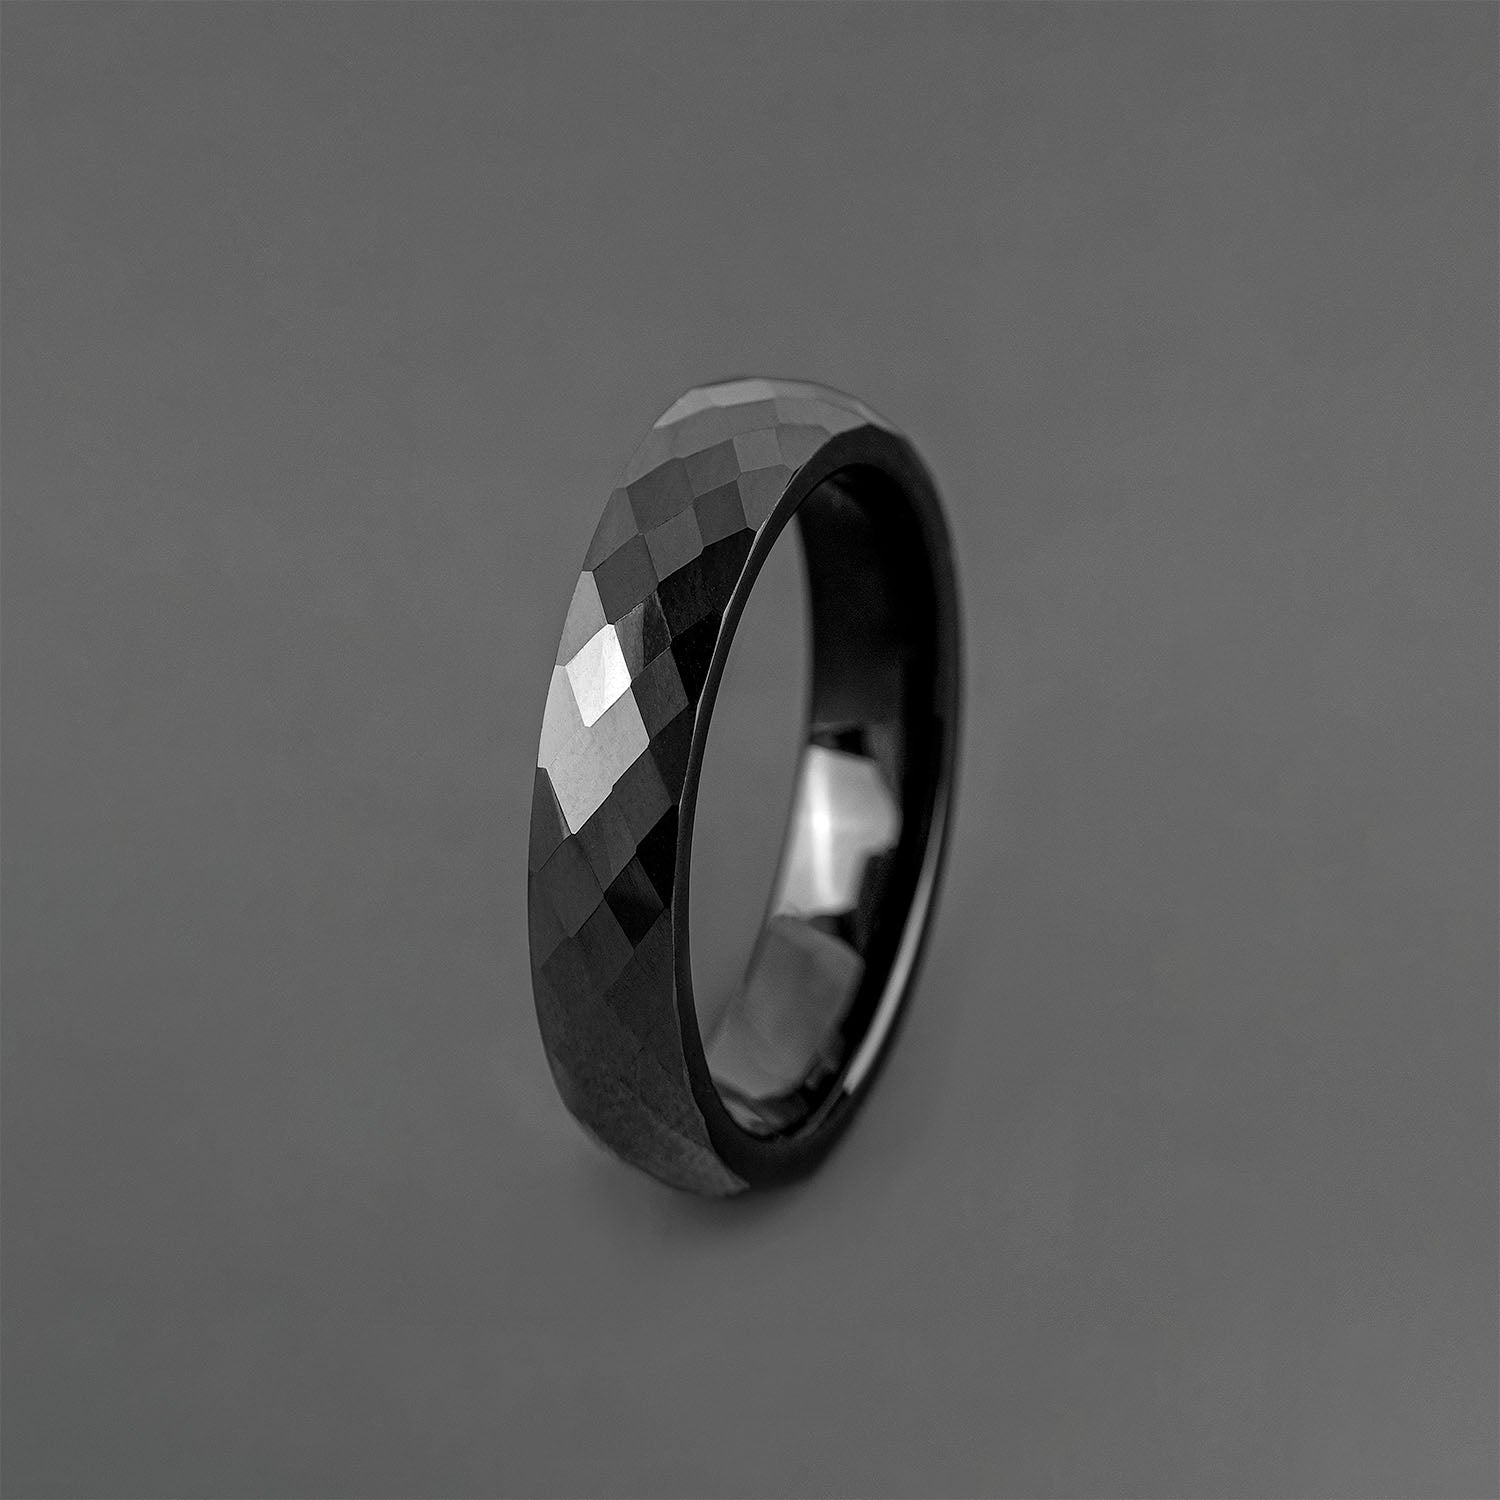 China High Tech Ceramic Wedding Bands Supplier, China black Ceramic Ring  Manufacturer, China Simple Ceramic Ring Supplier